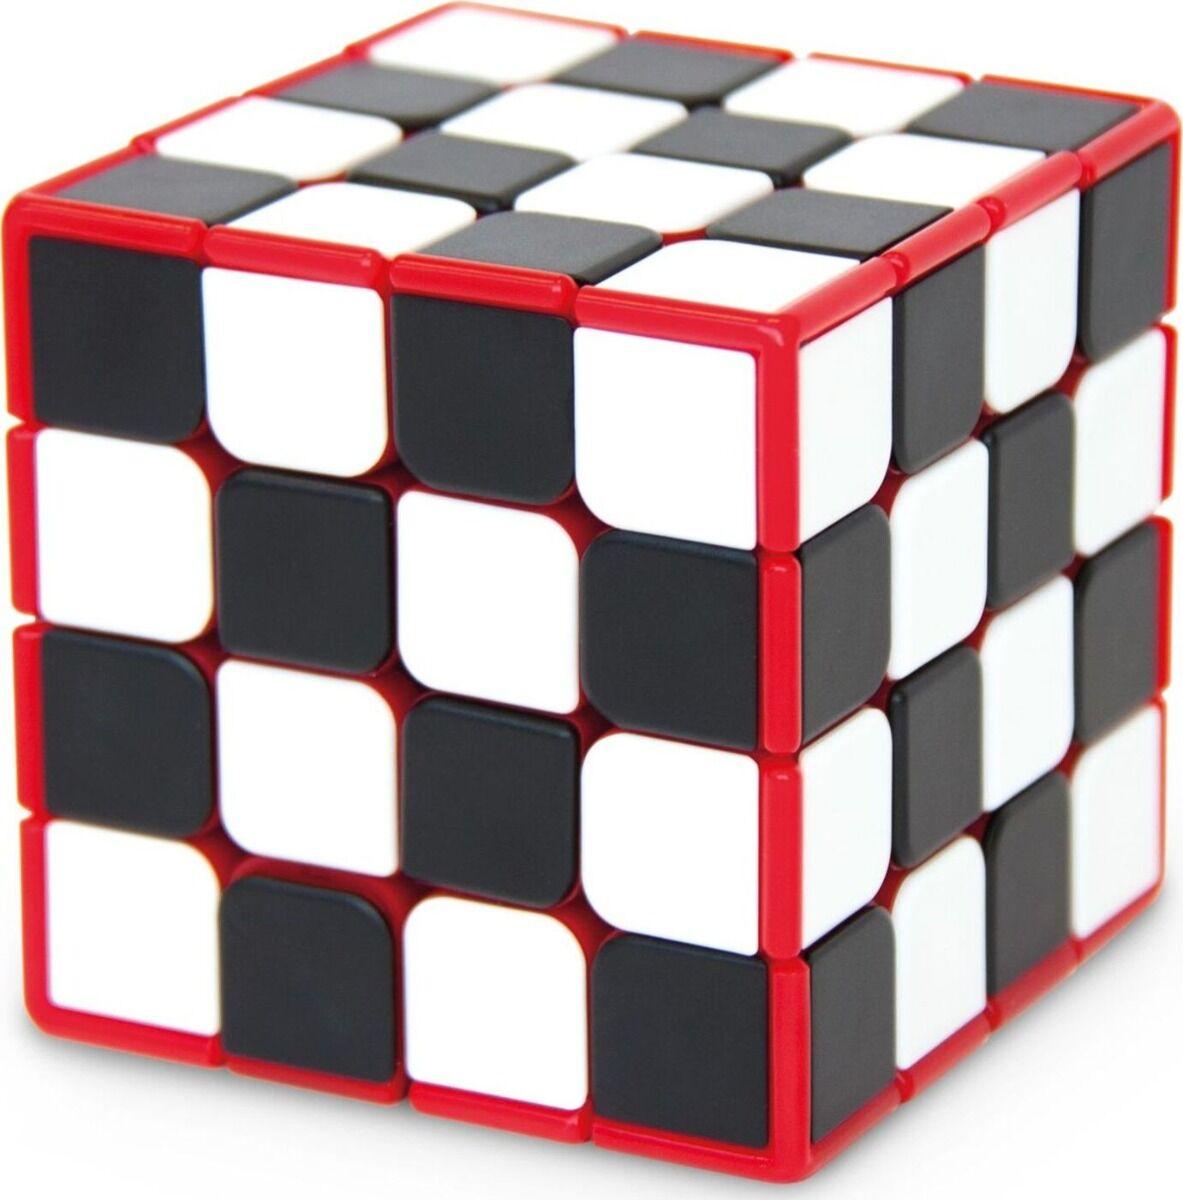 Meffert's: Шашки-Куб 4х4 (Checker Cube), фото 1